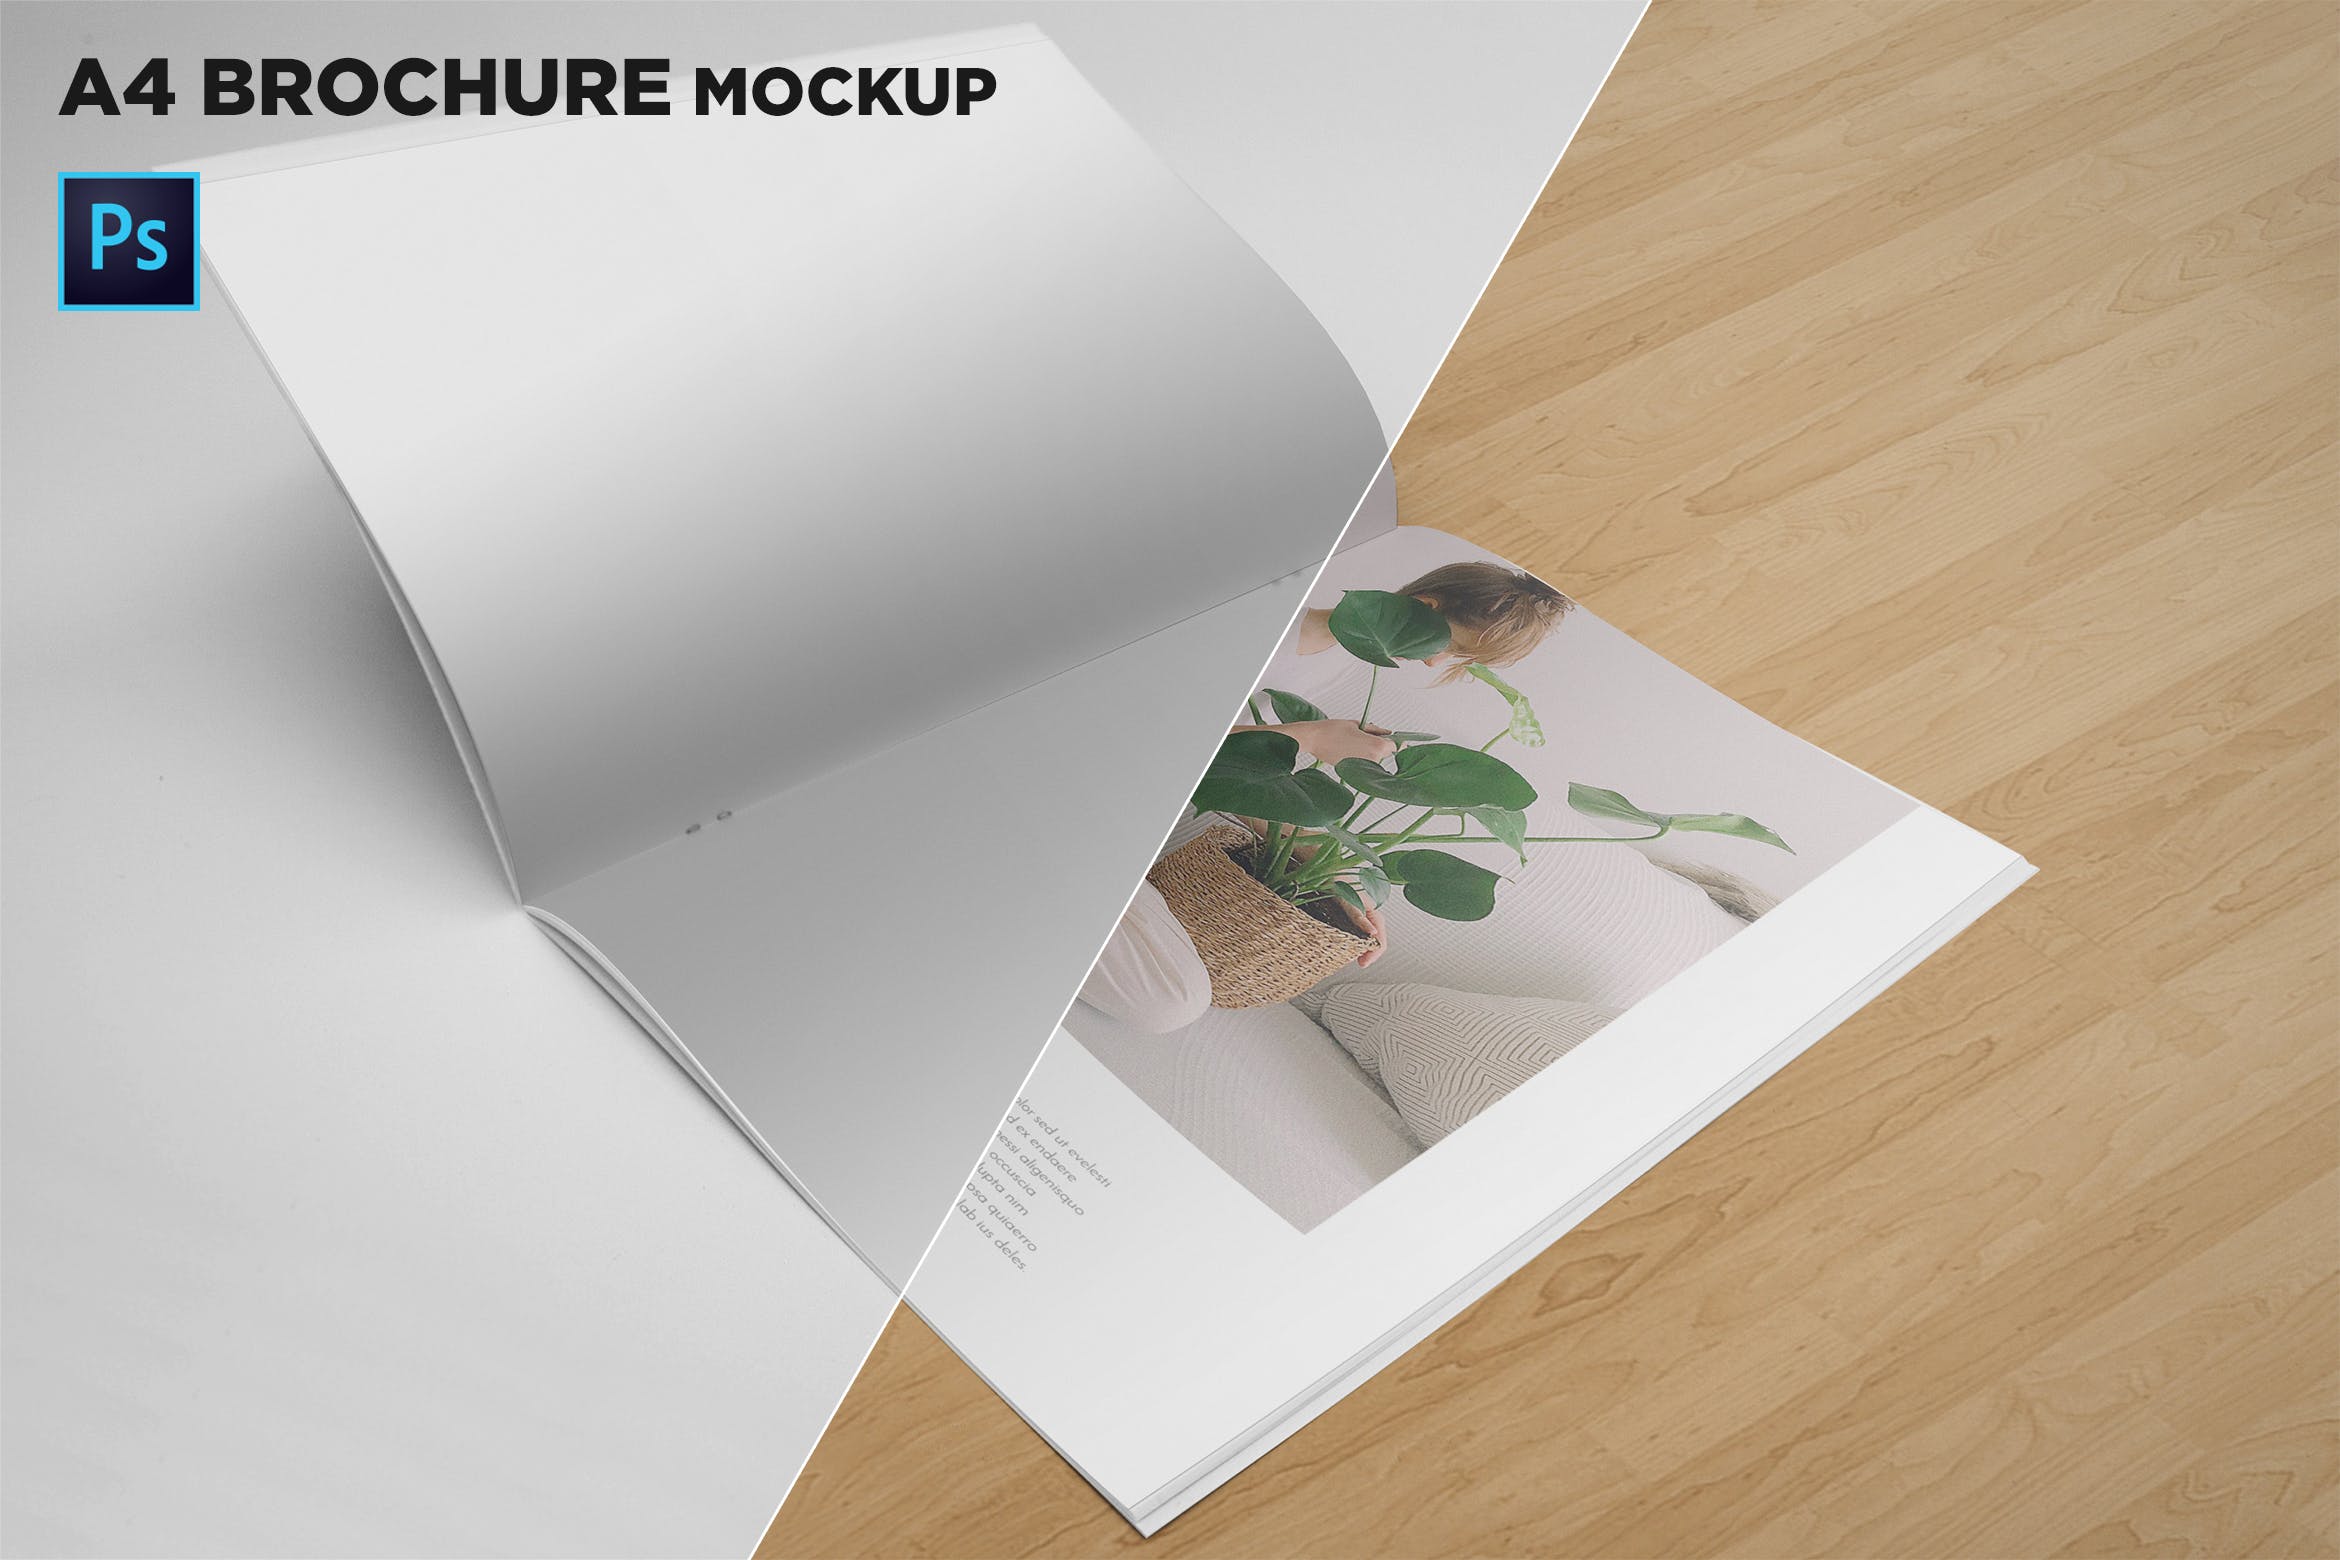 A4宣传小册子/企业画册翻页视图样机蚂蚁素材精选 A4 Brochure Mockup Open Pages插图